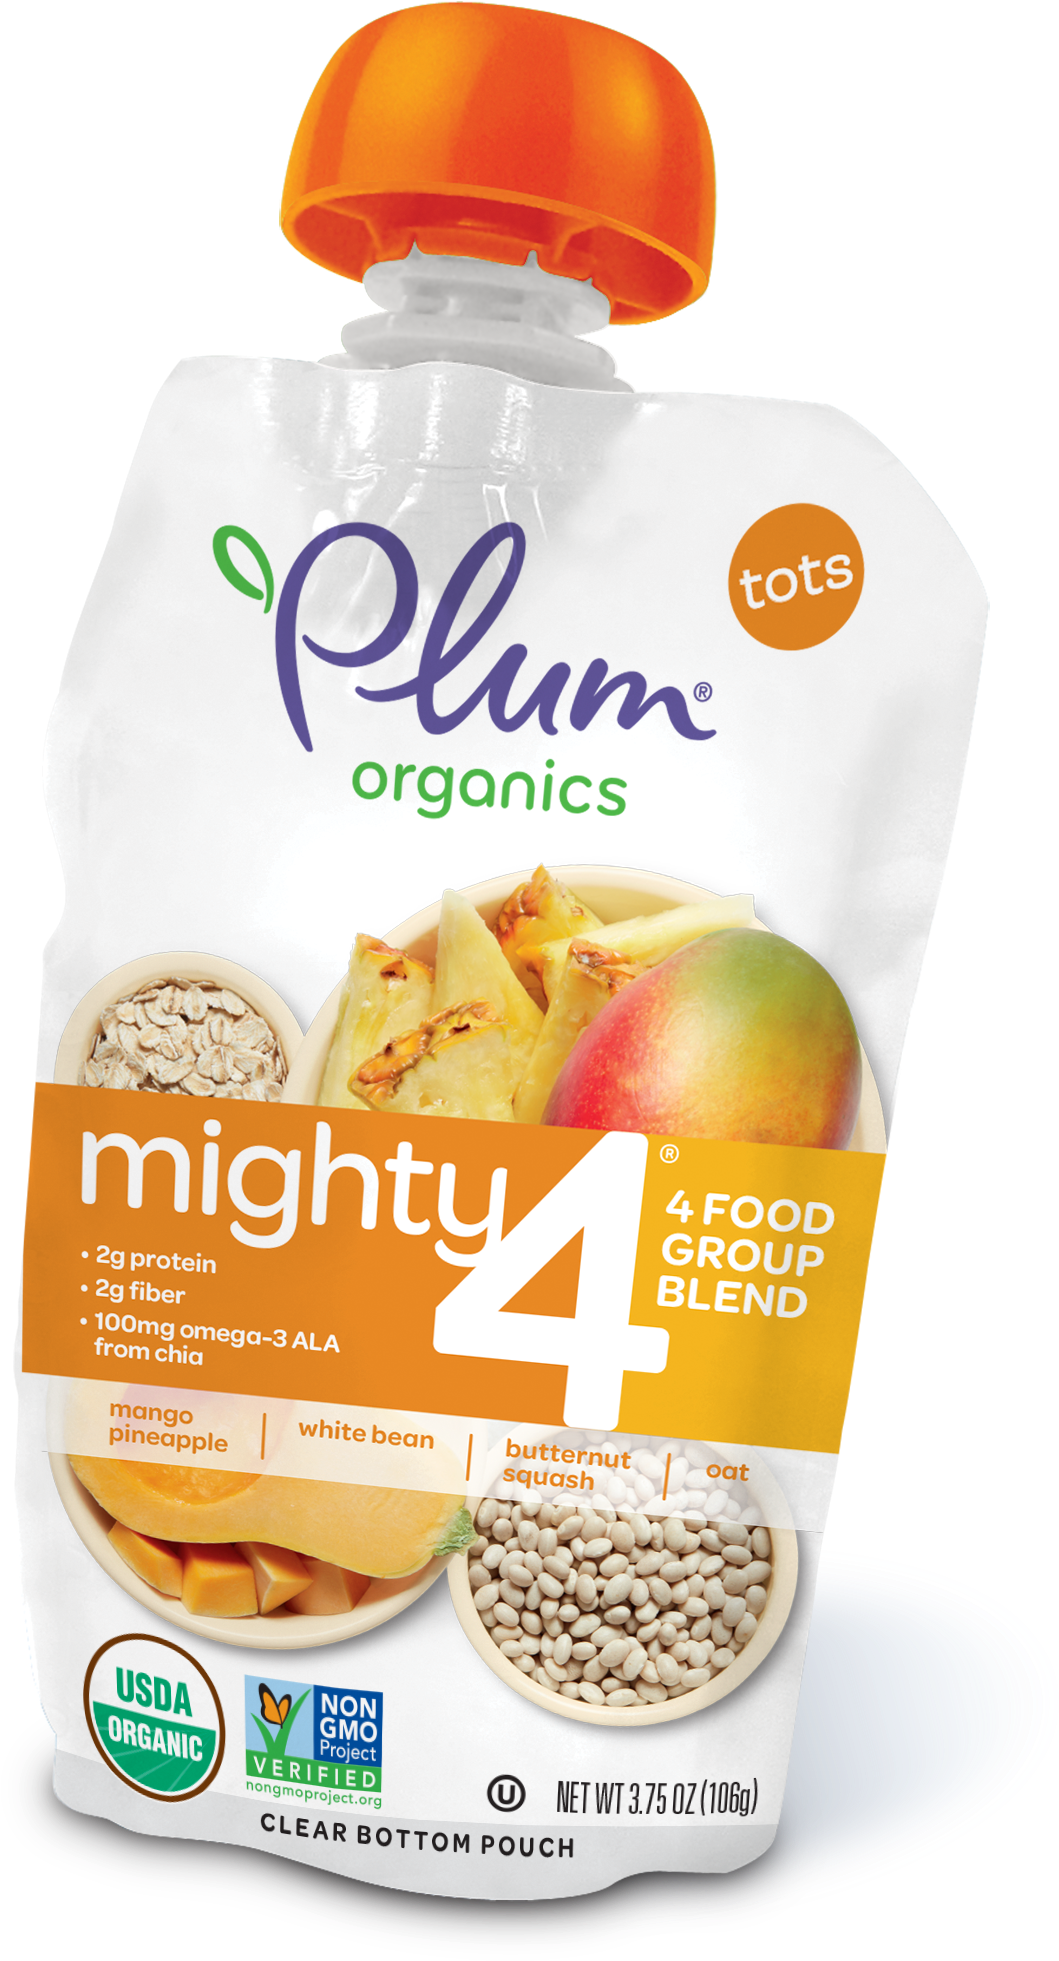 Mango & Pineapple, White Bean, Butternut Squash, Oat - Plum Organics (1947x2443), Png Download